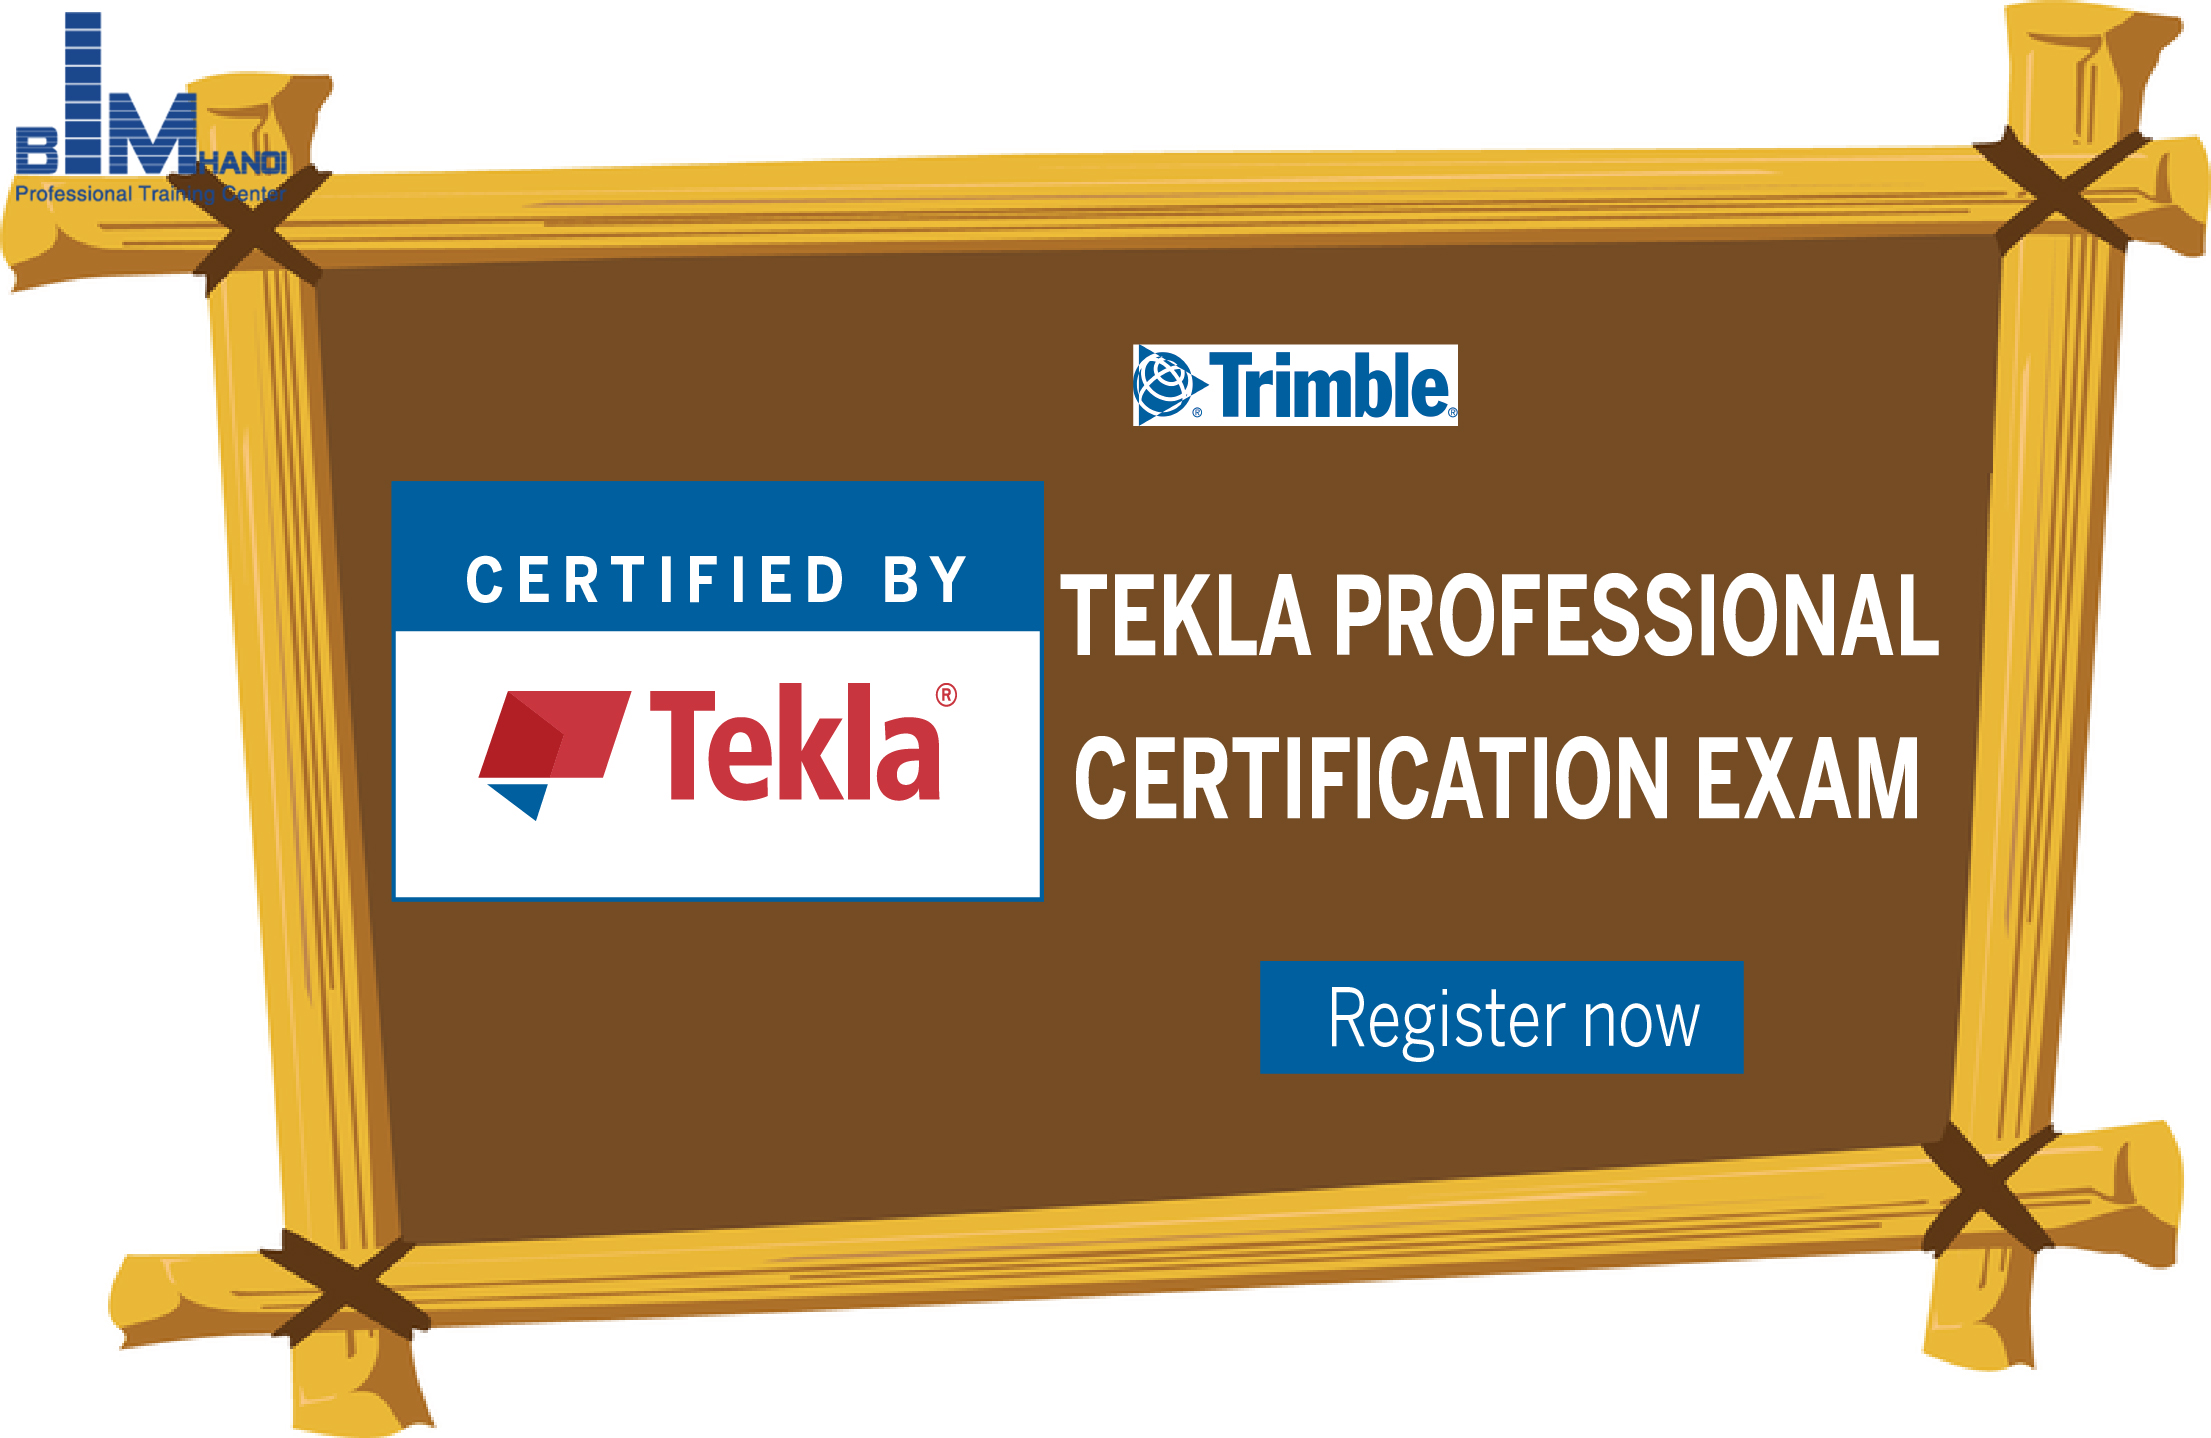 Thi chứng chỉ Tekla Professional Certificate